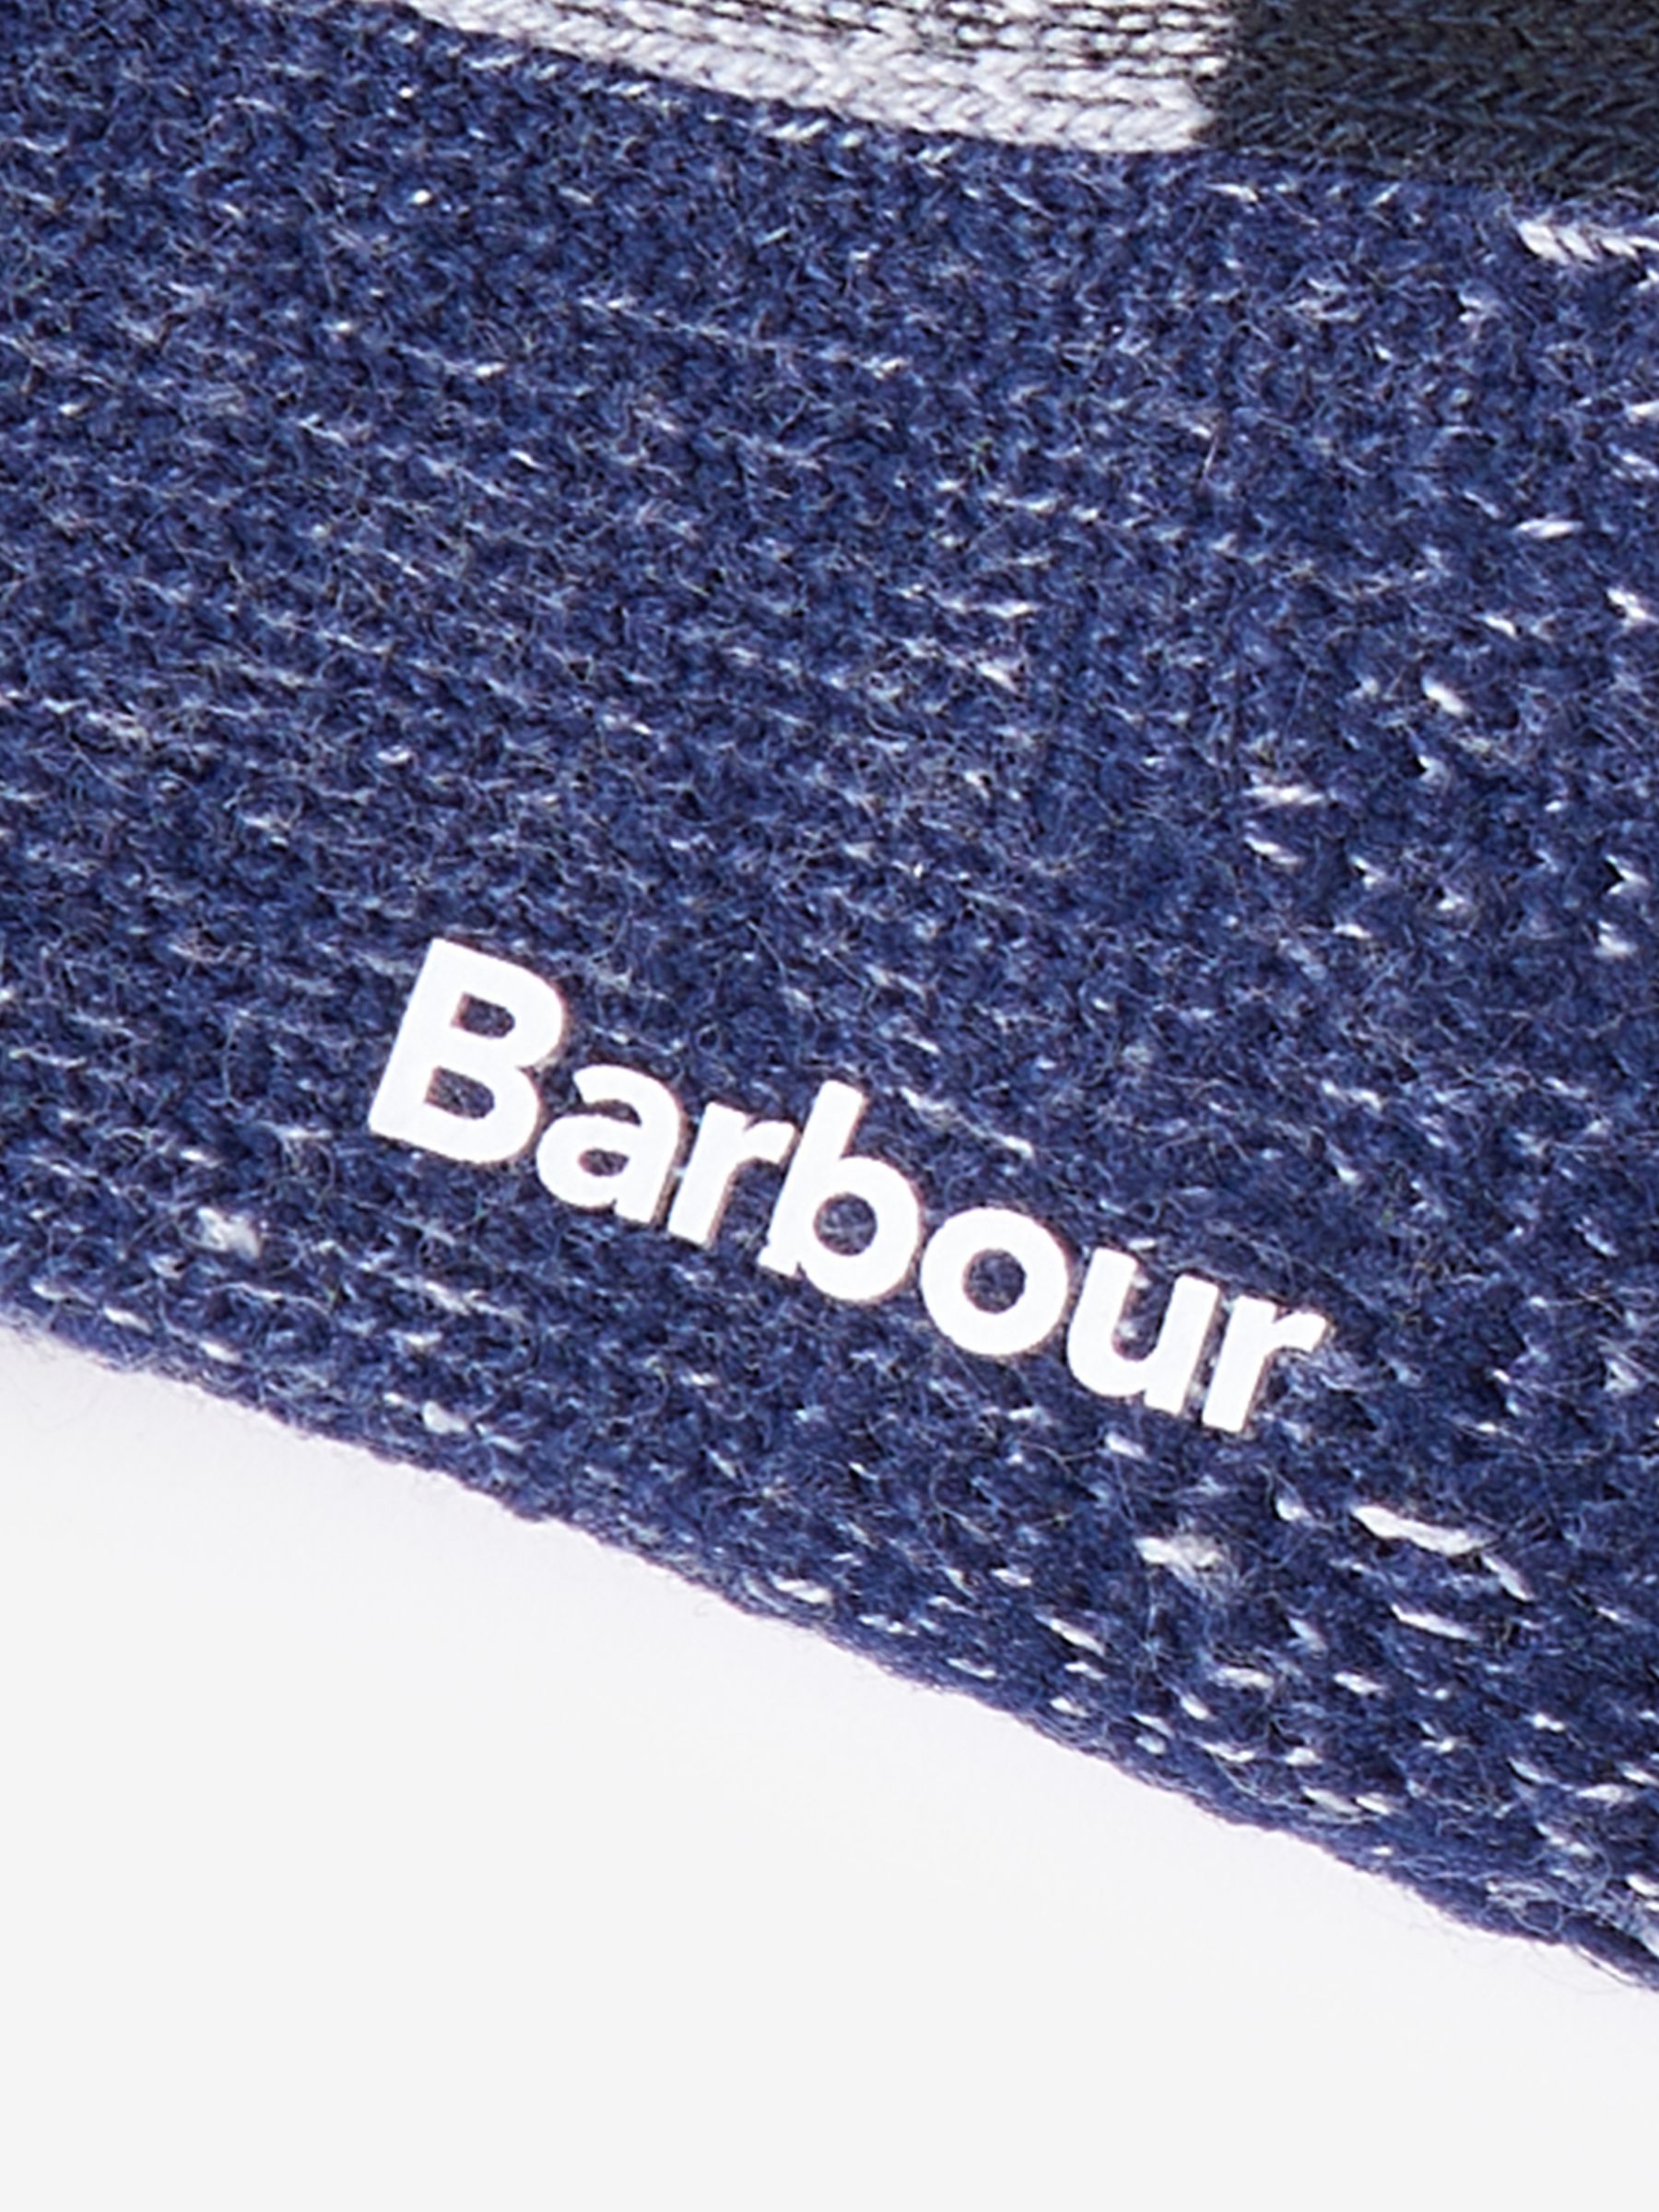 Buy Barbour Lowland Coolmax Hiker Socks, One Size, Navy Online at johnlewis.com